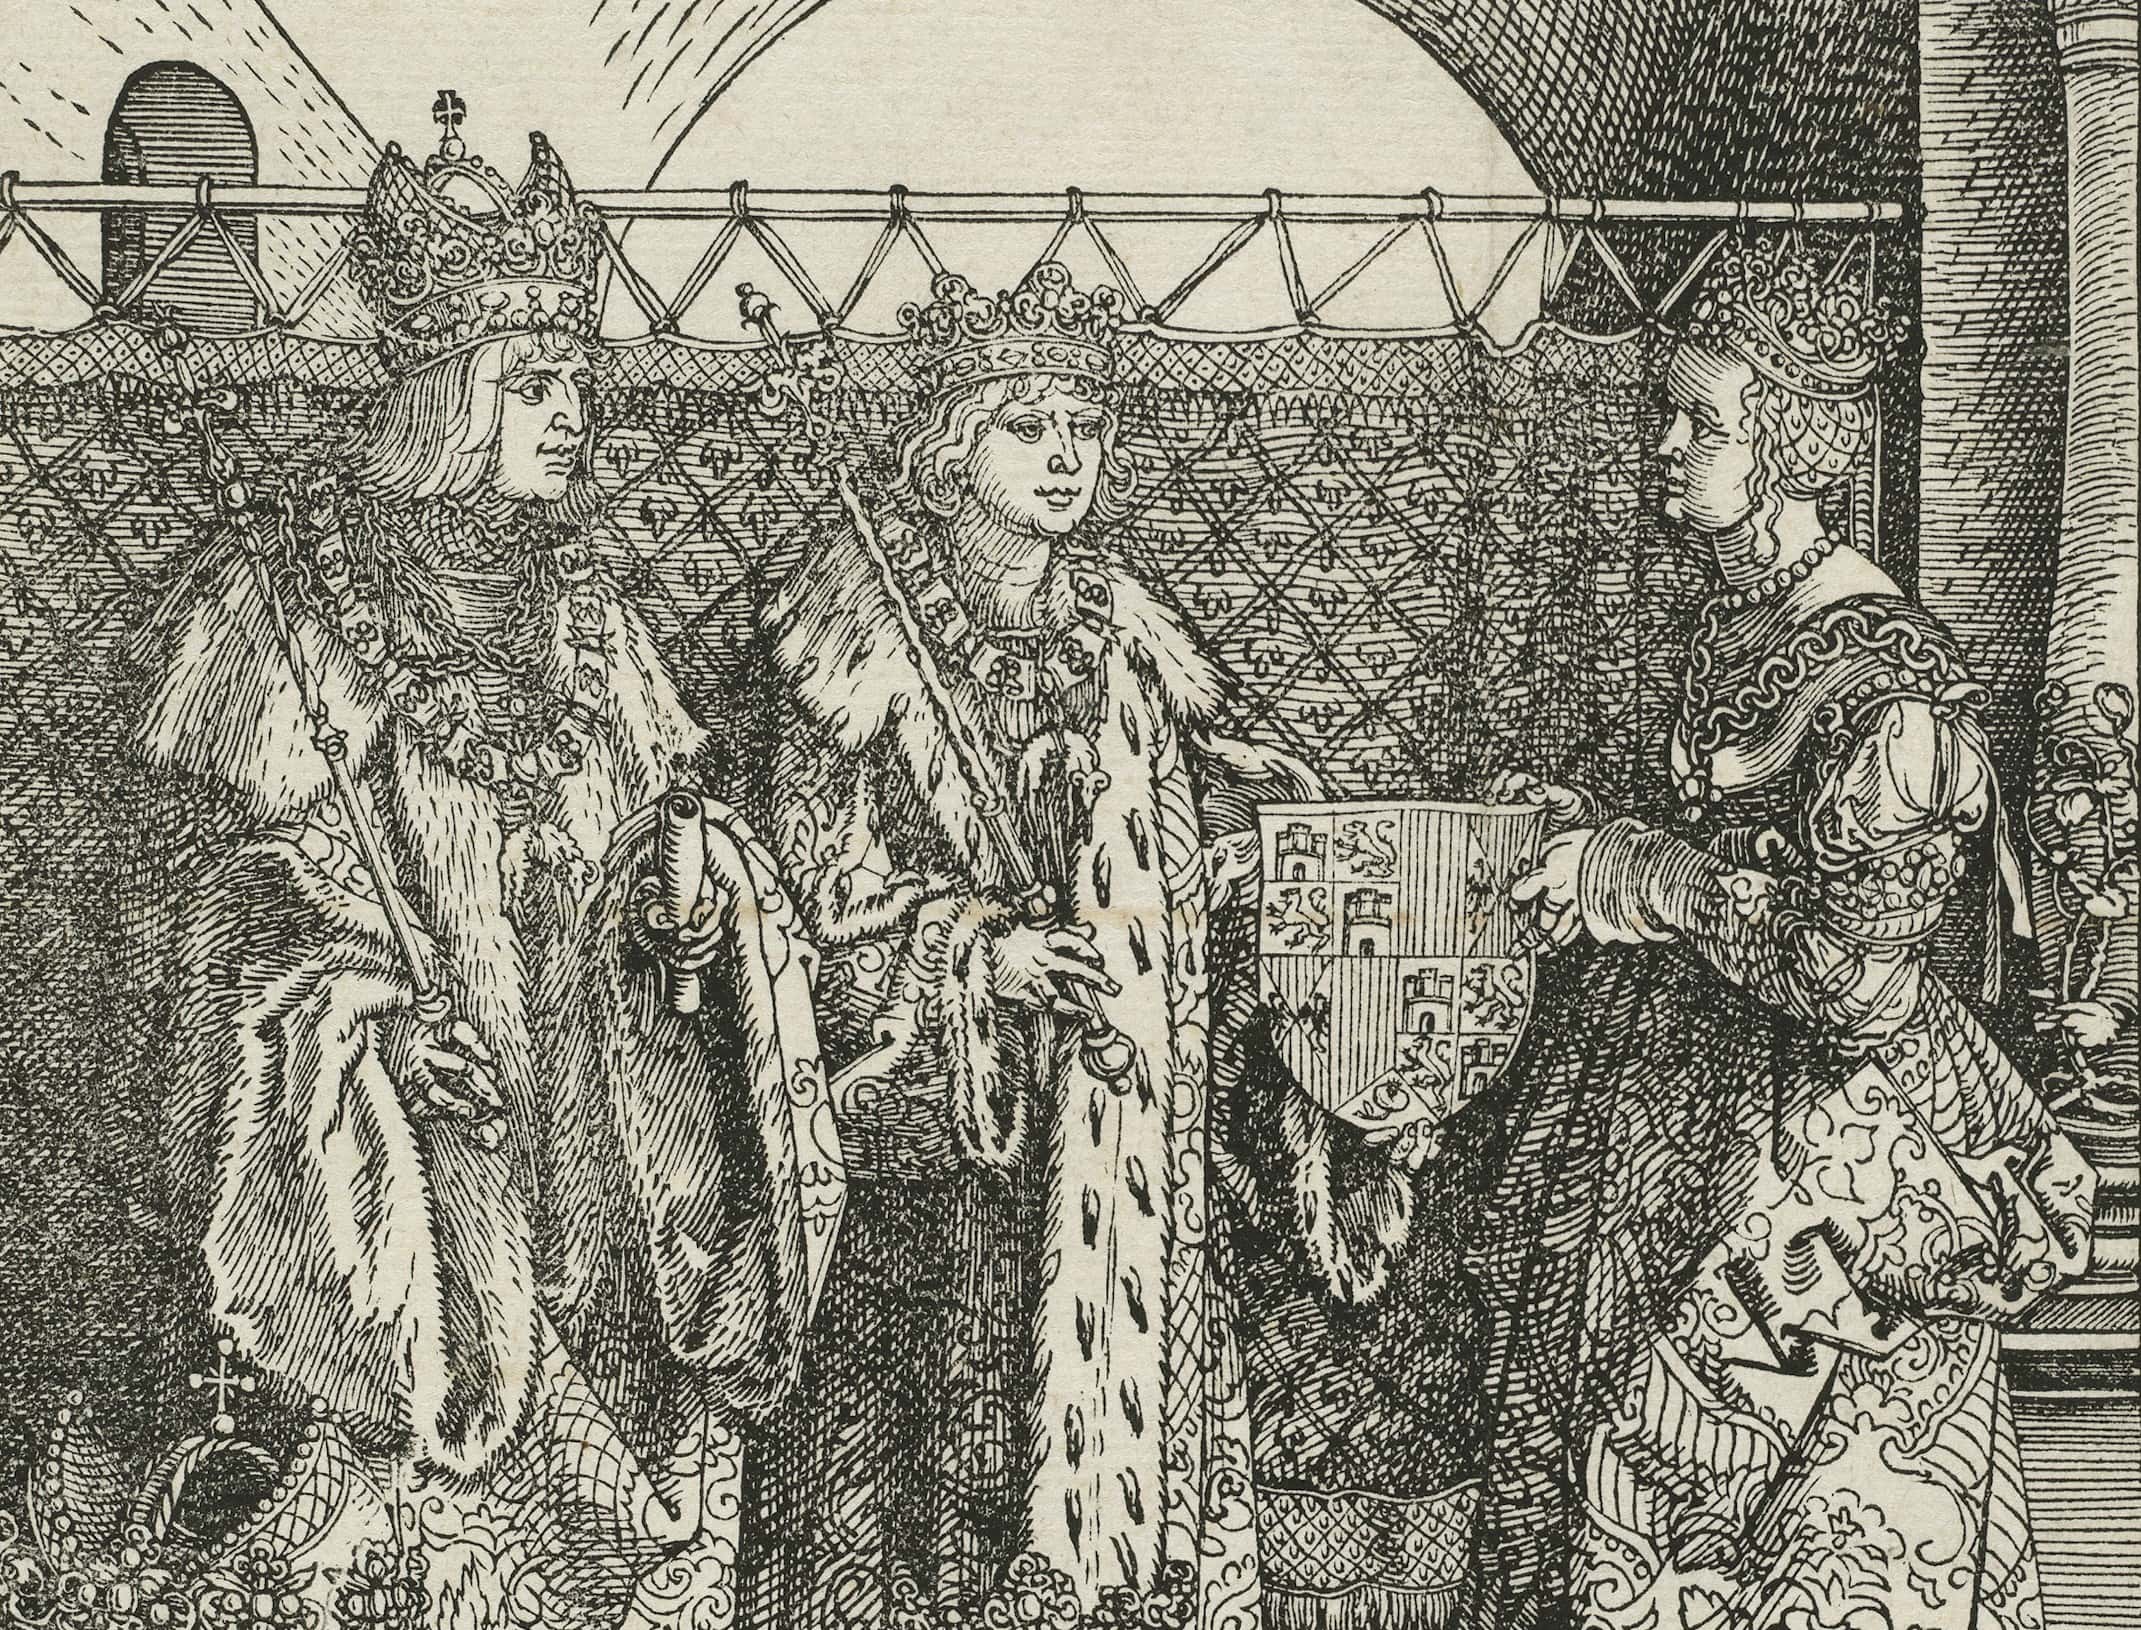 Joanna Of Castile facts 